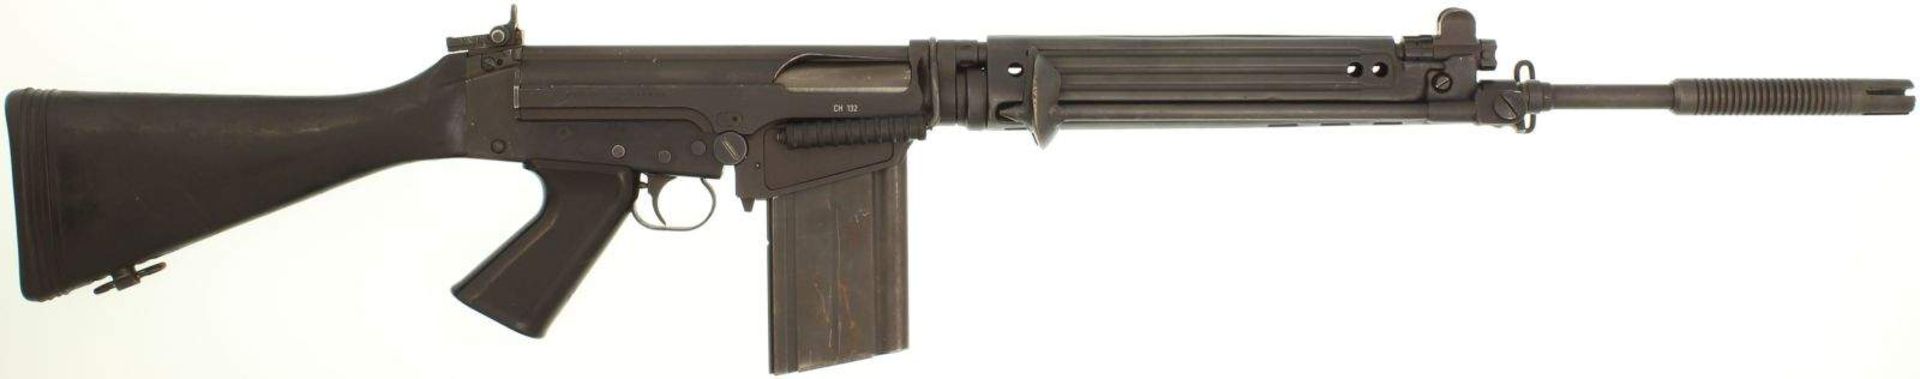 Sturmgewehr, Steyr FN FAL, Stg. 58, Kal. .308. LL 580mm inkl. Mündungsbremse, TL 1090mm,